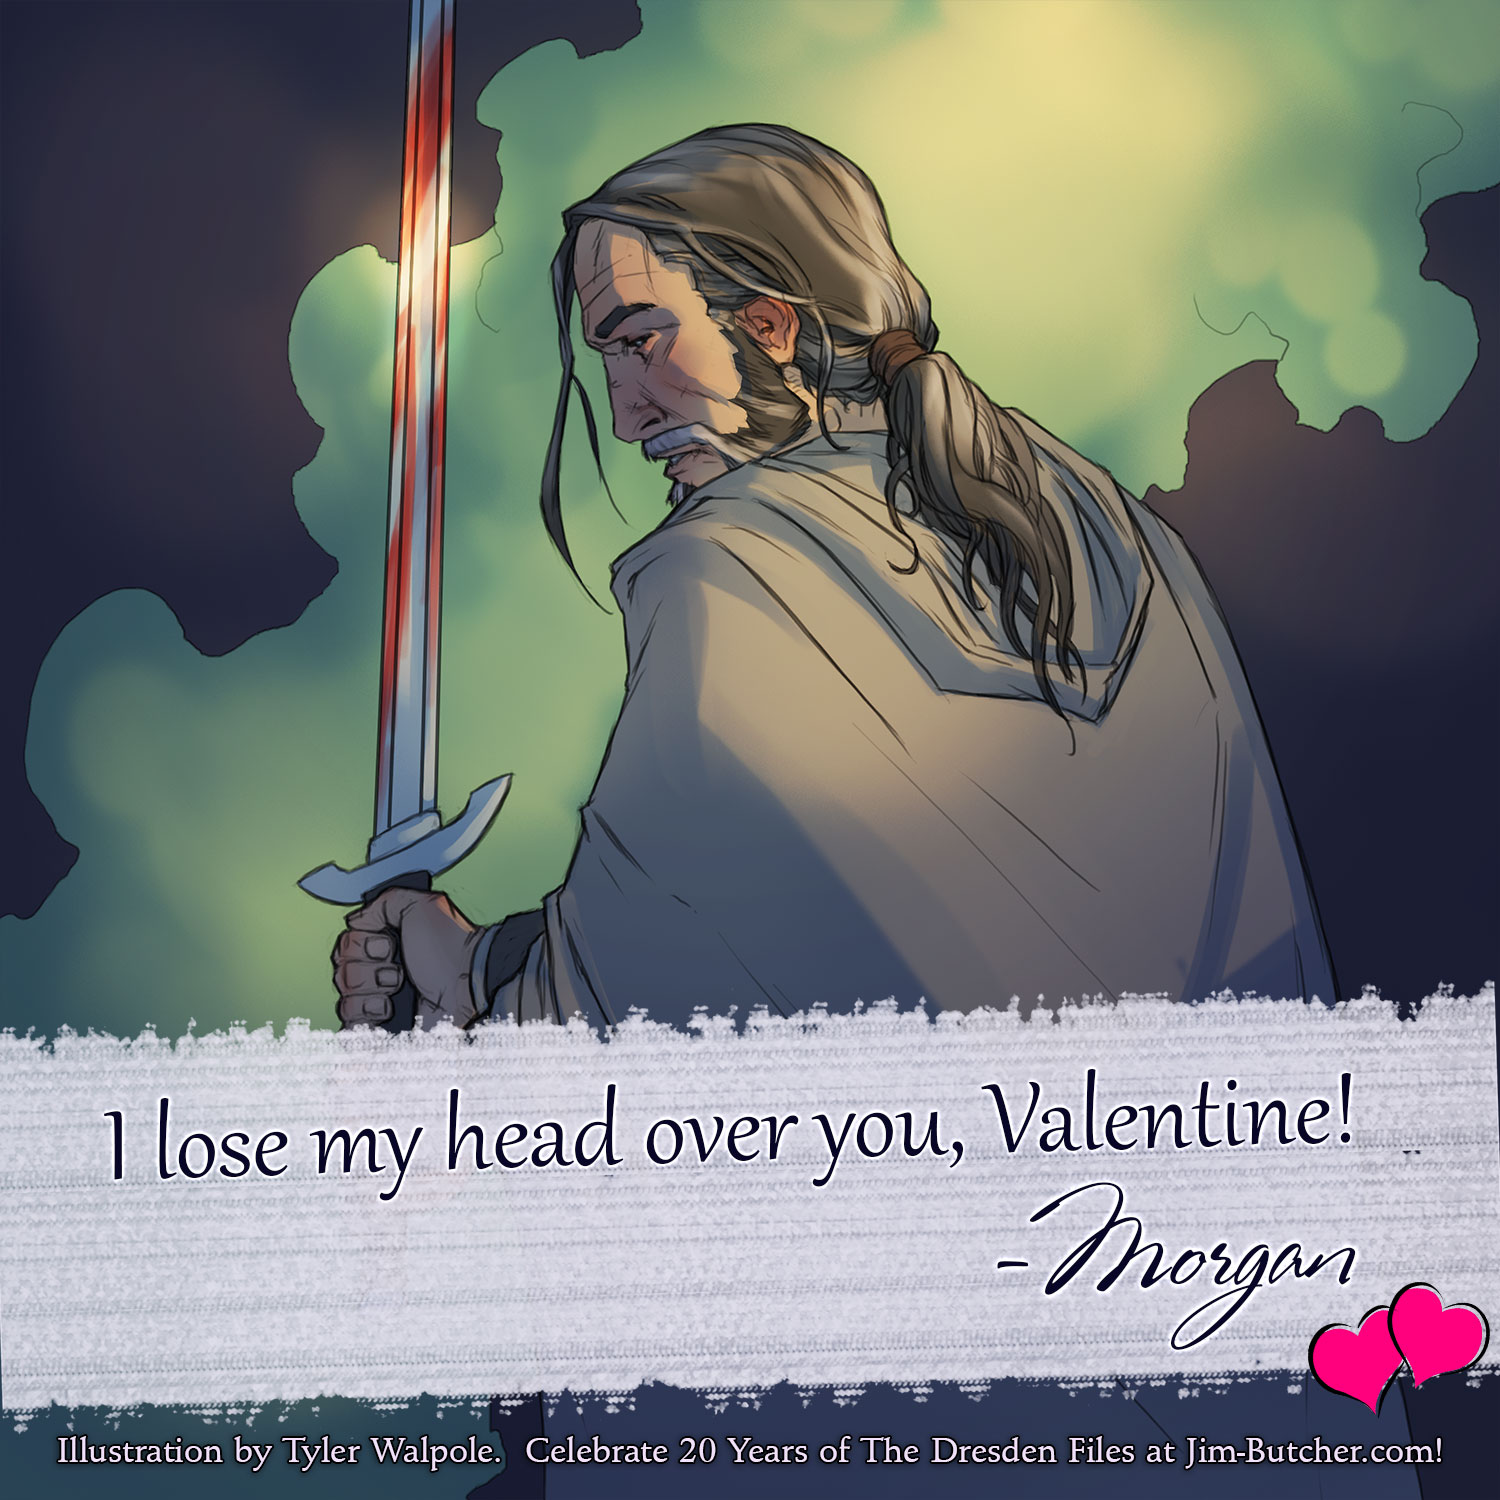 Morgan: I lose my head over you, Valentine!